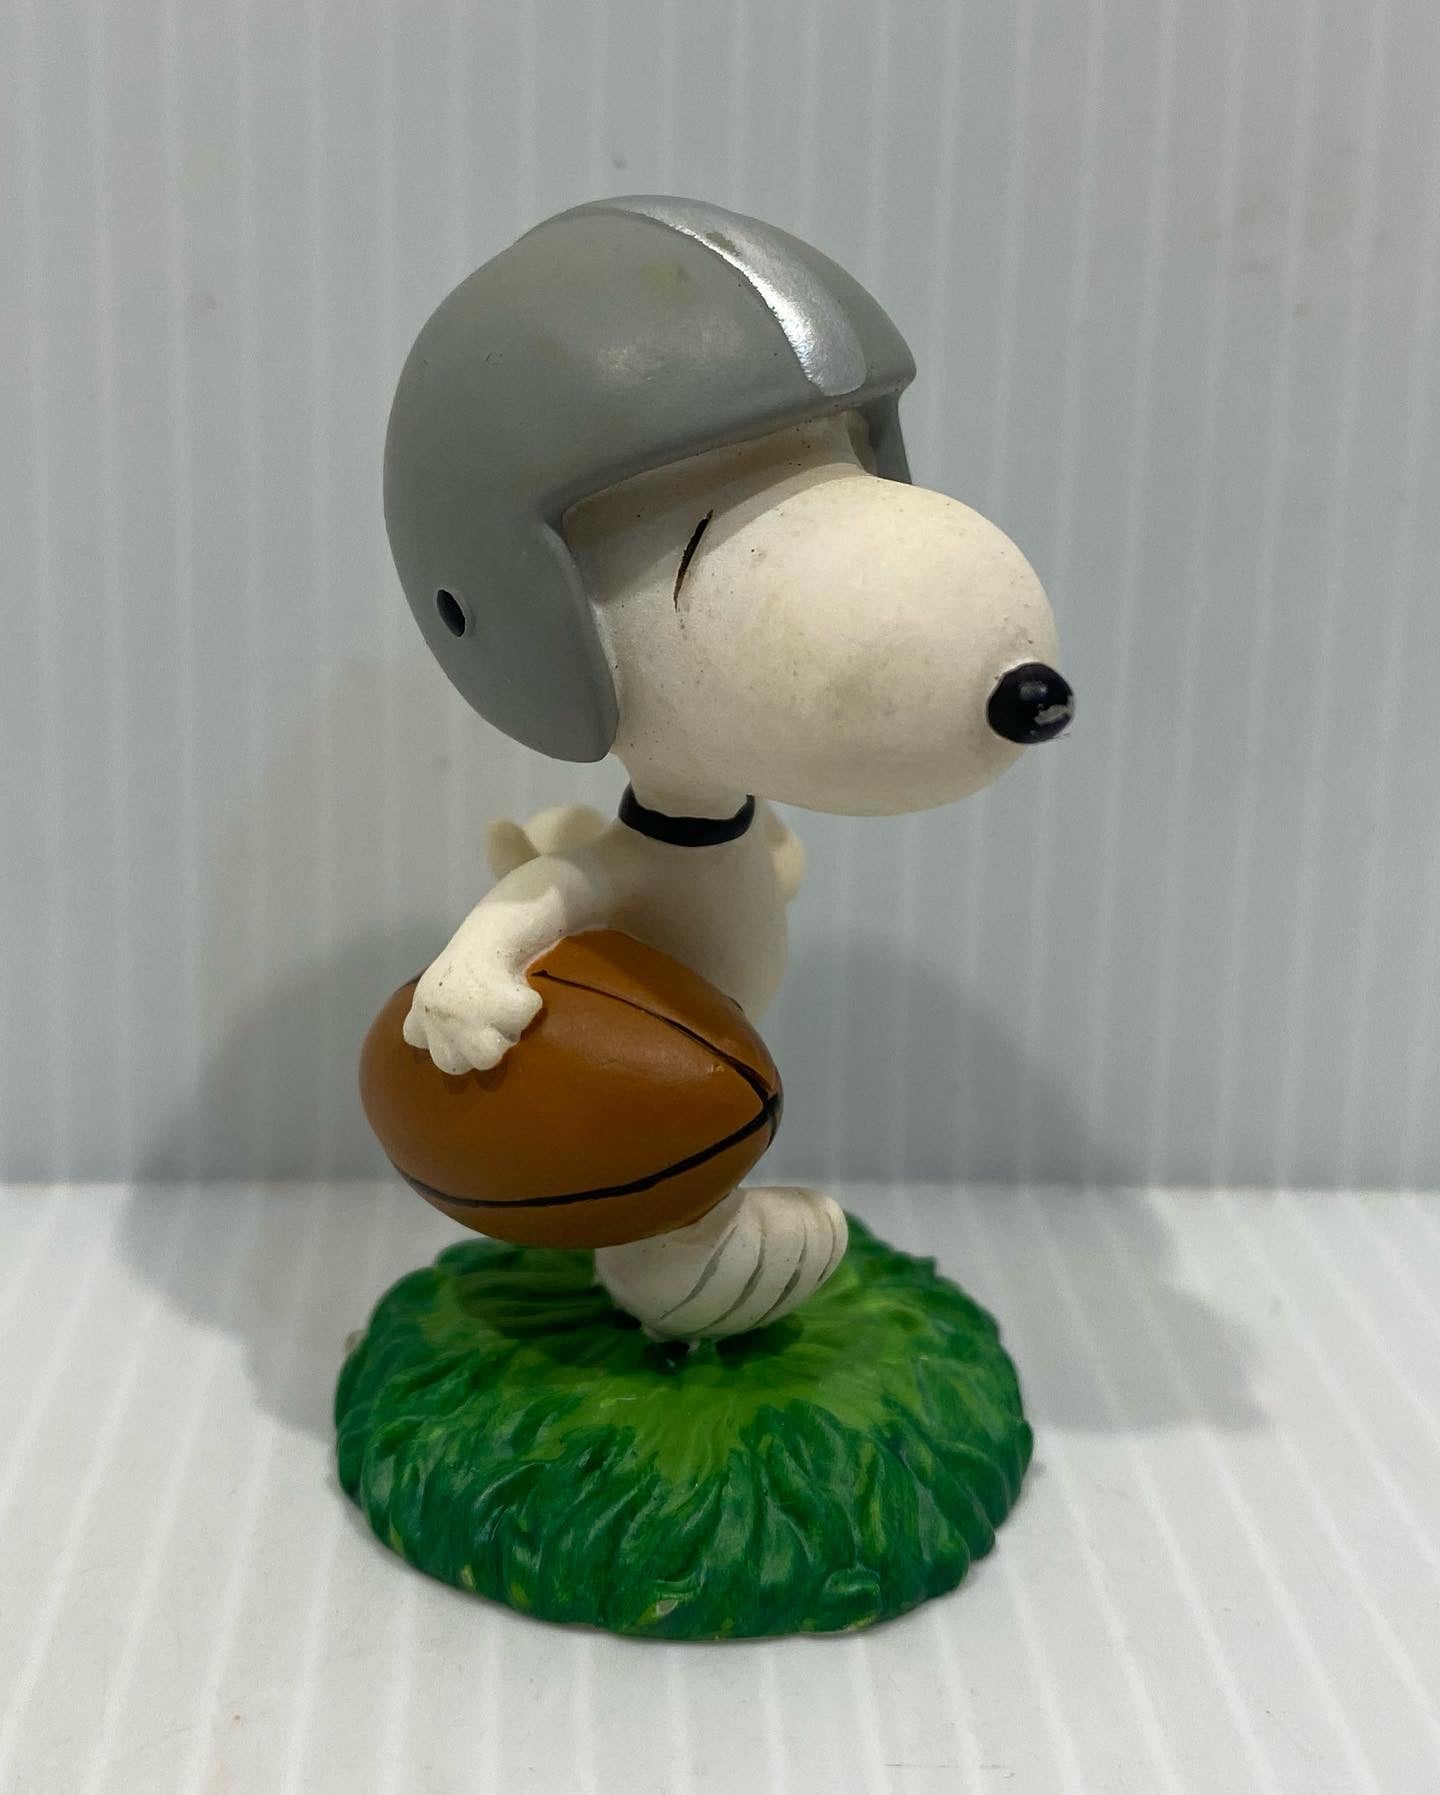 Westland Gifeware Peanuts "Snoopy Football" - #8243 - in box.  50th Anniversary Figures.